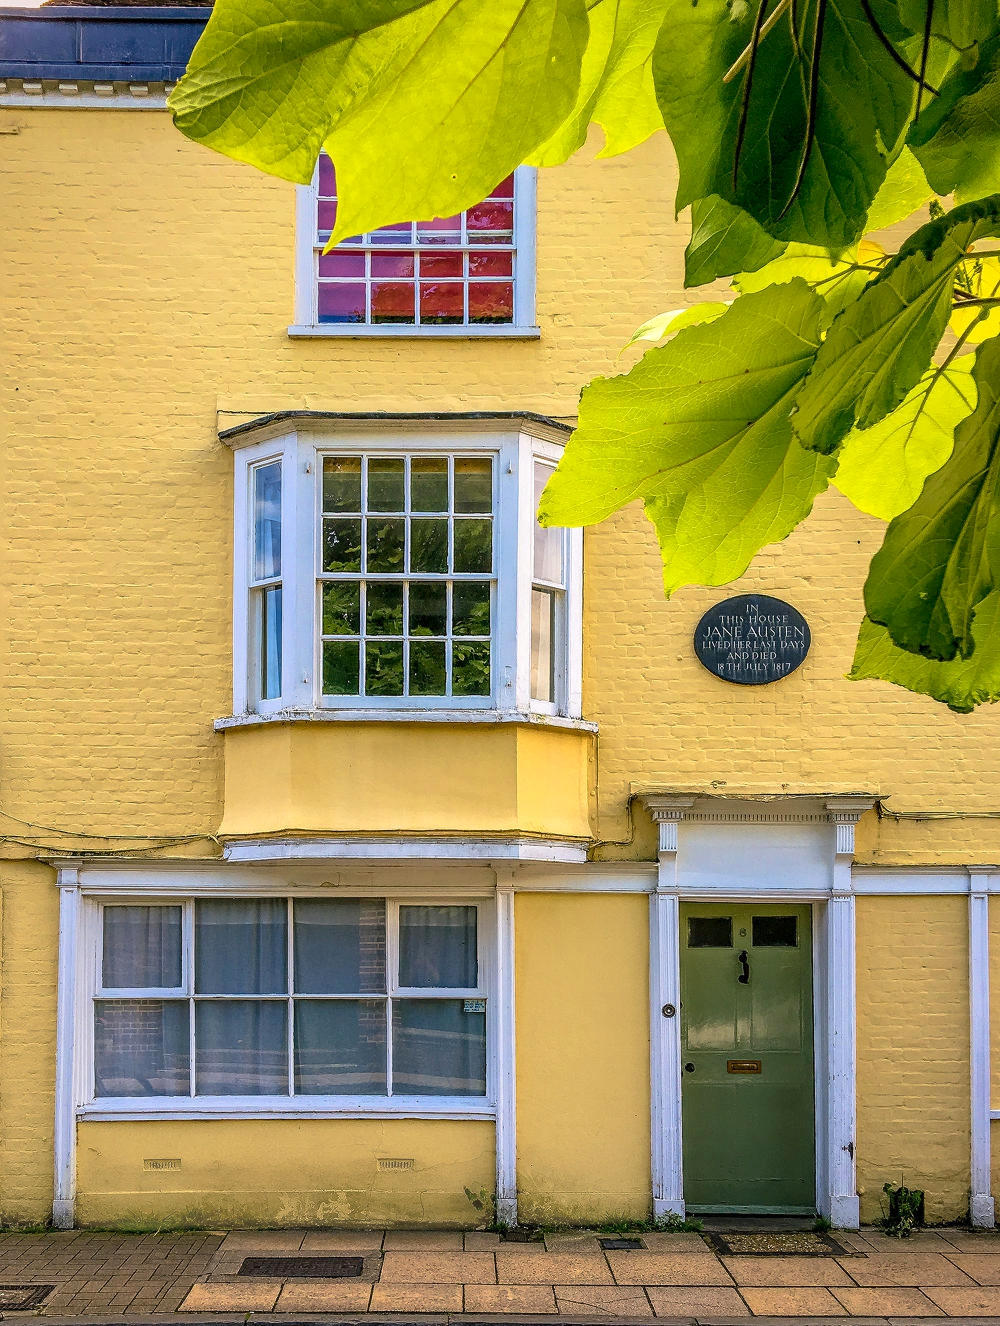 Jane Austen's house on College Street Winchester. Credit Anguskirk, flickr